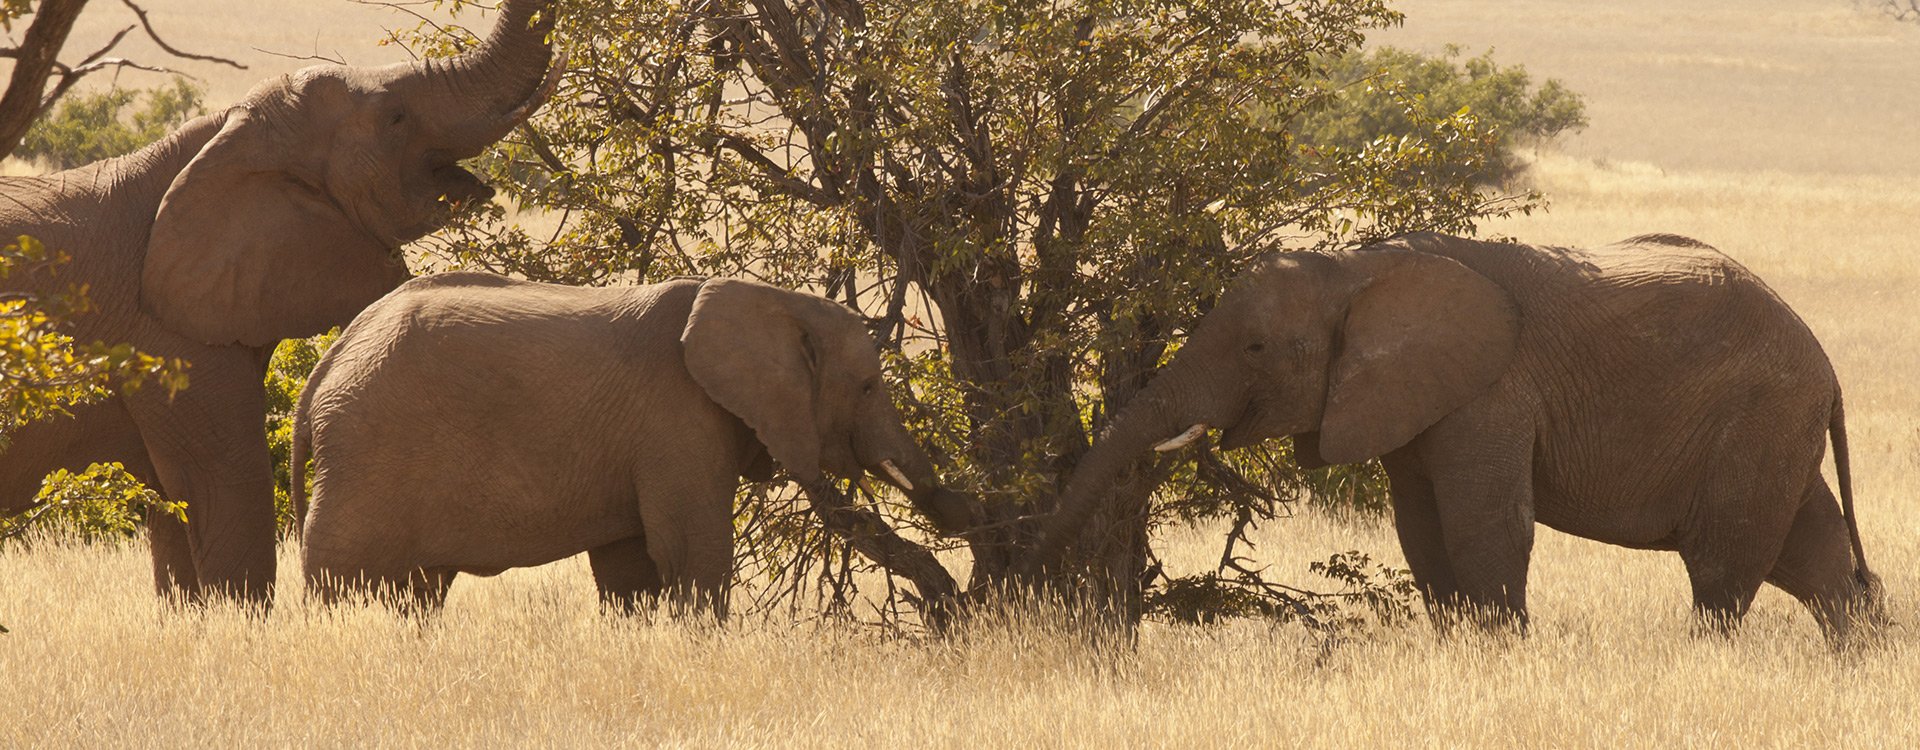 Botswana_Kalahari desert_Elephants